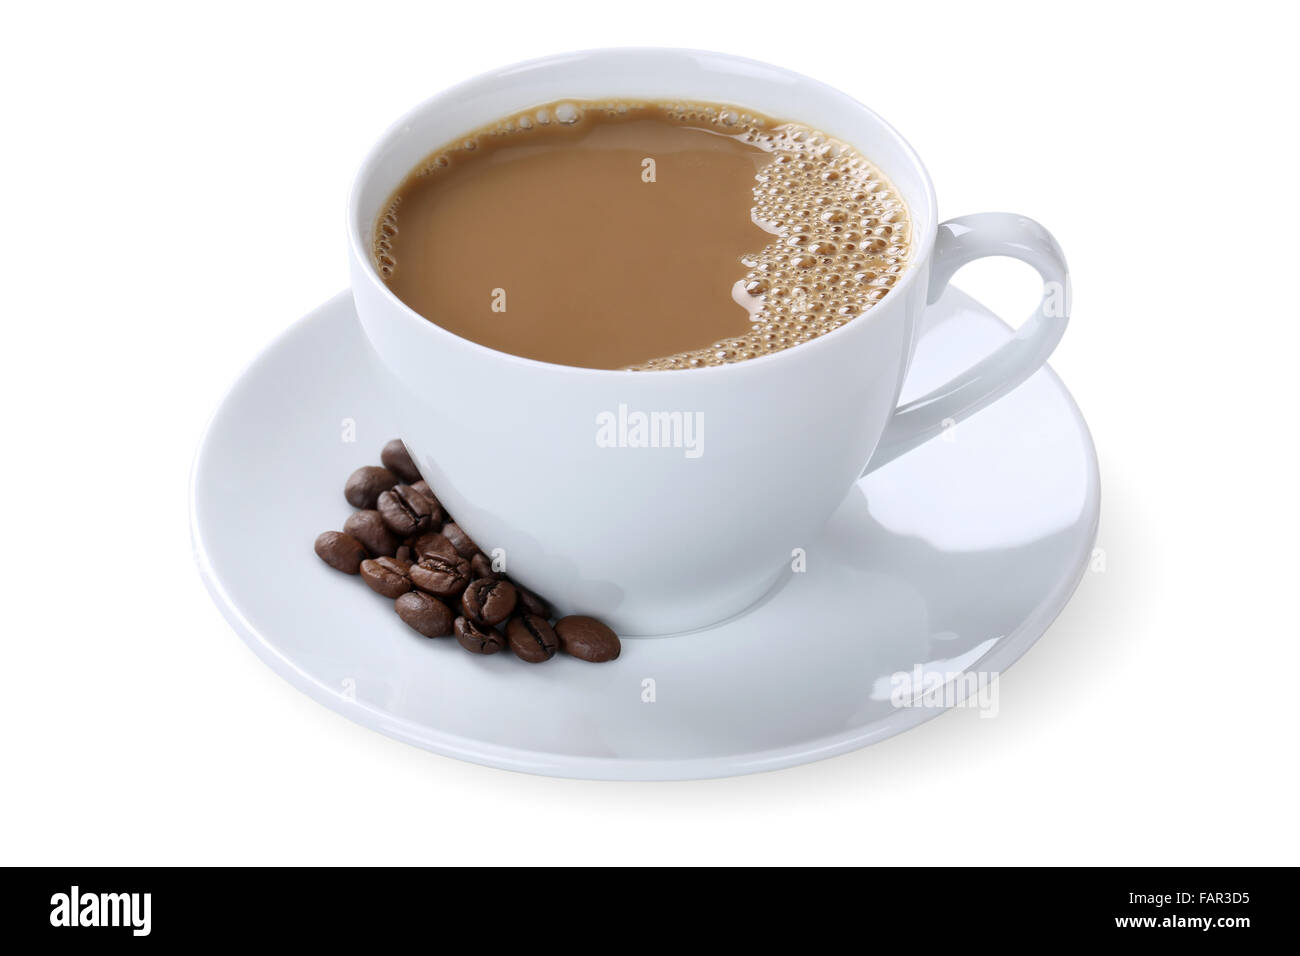 https://c8.alamy.com/compes/far3d5/cafe-con-leche-cafe-con-leche-con-leche-en-taza-aislado-sobre-un-fondo-blanco-far3d5.jpg